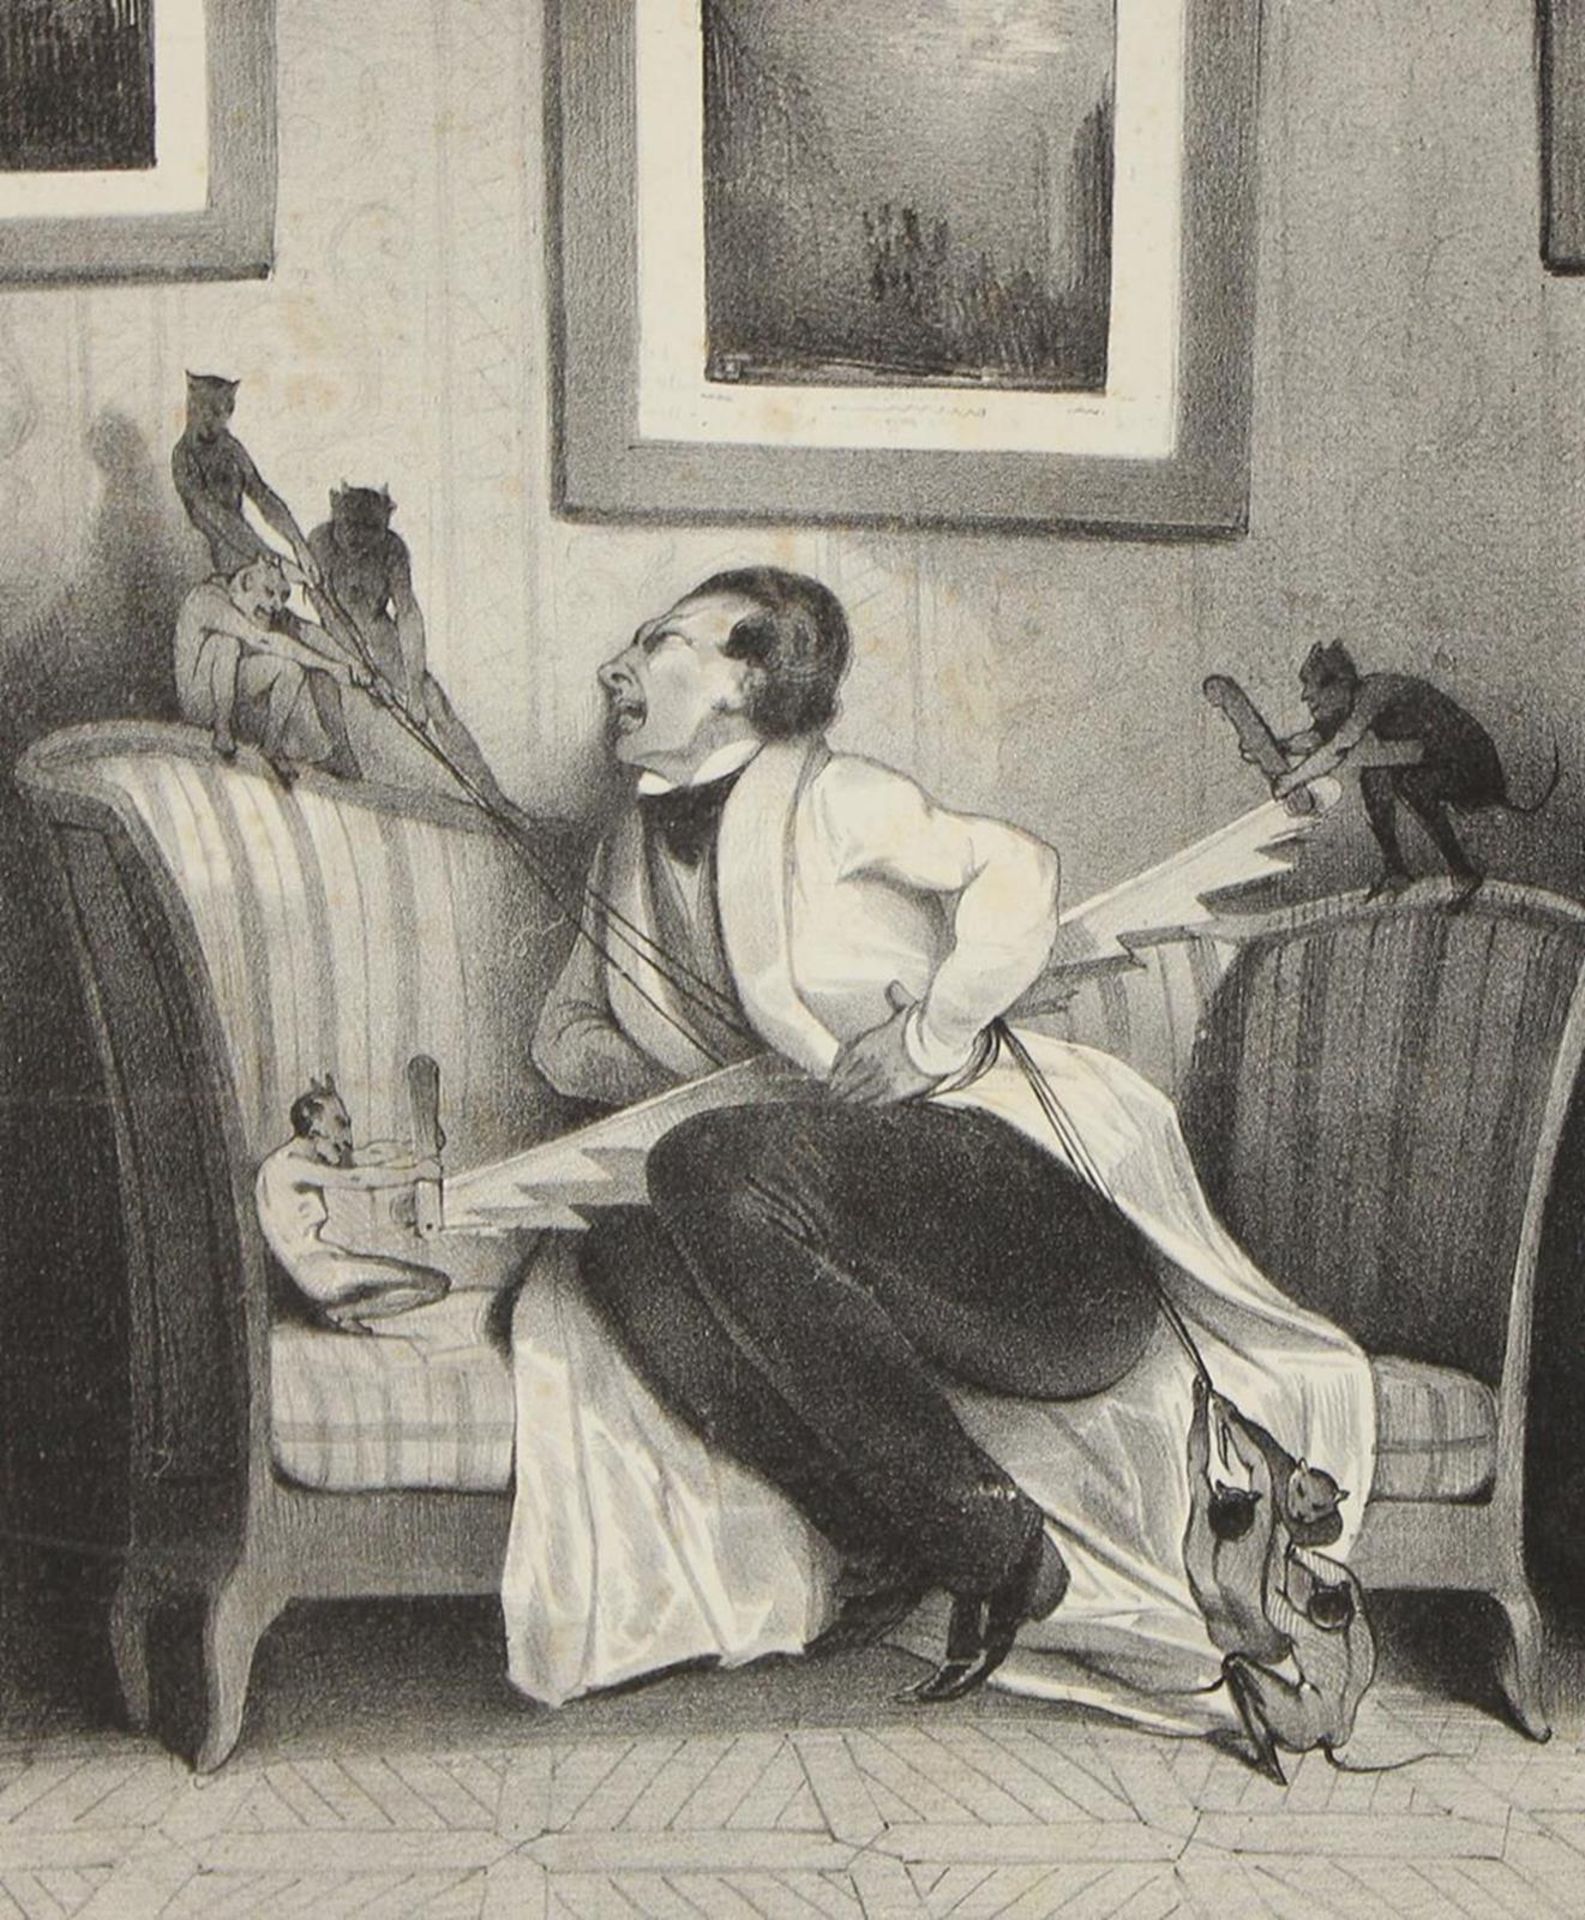 L'imagination. Le medecin.La Colique. Lith. von Benard bei Aubert auf dünnem Karton, um 1860. 2